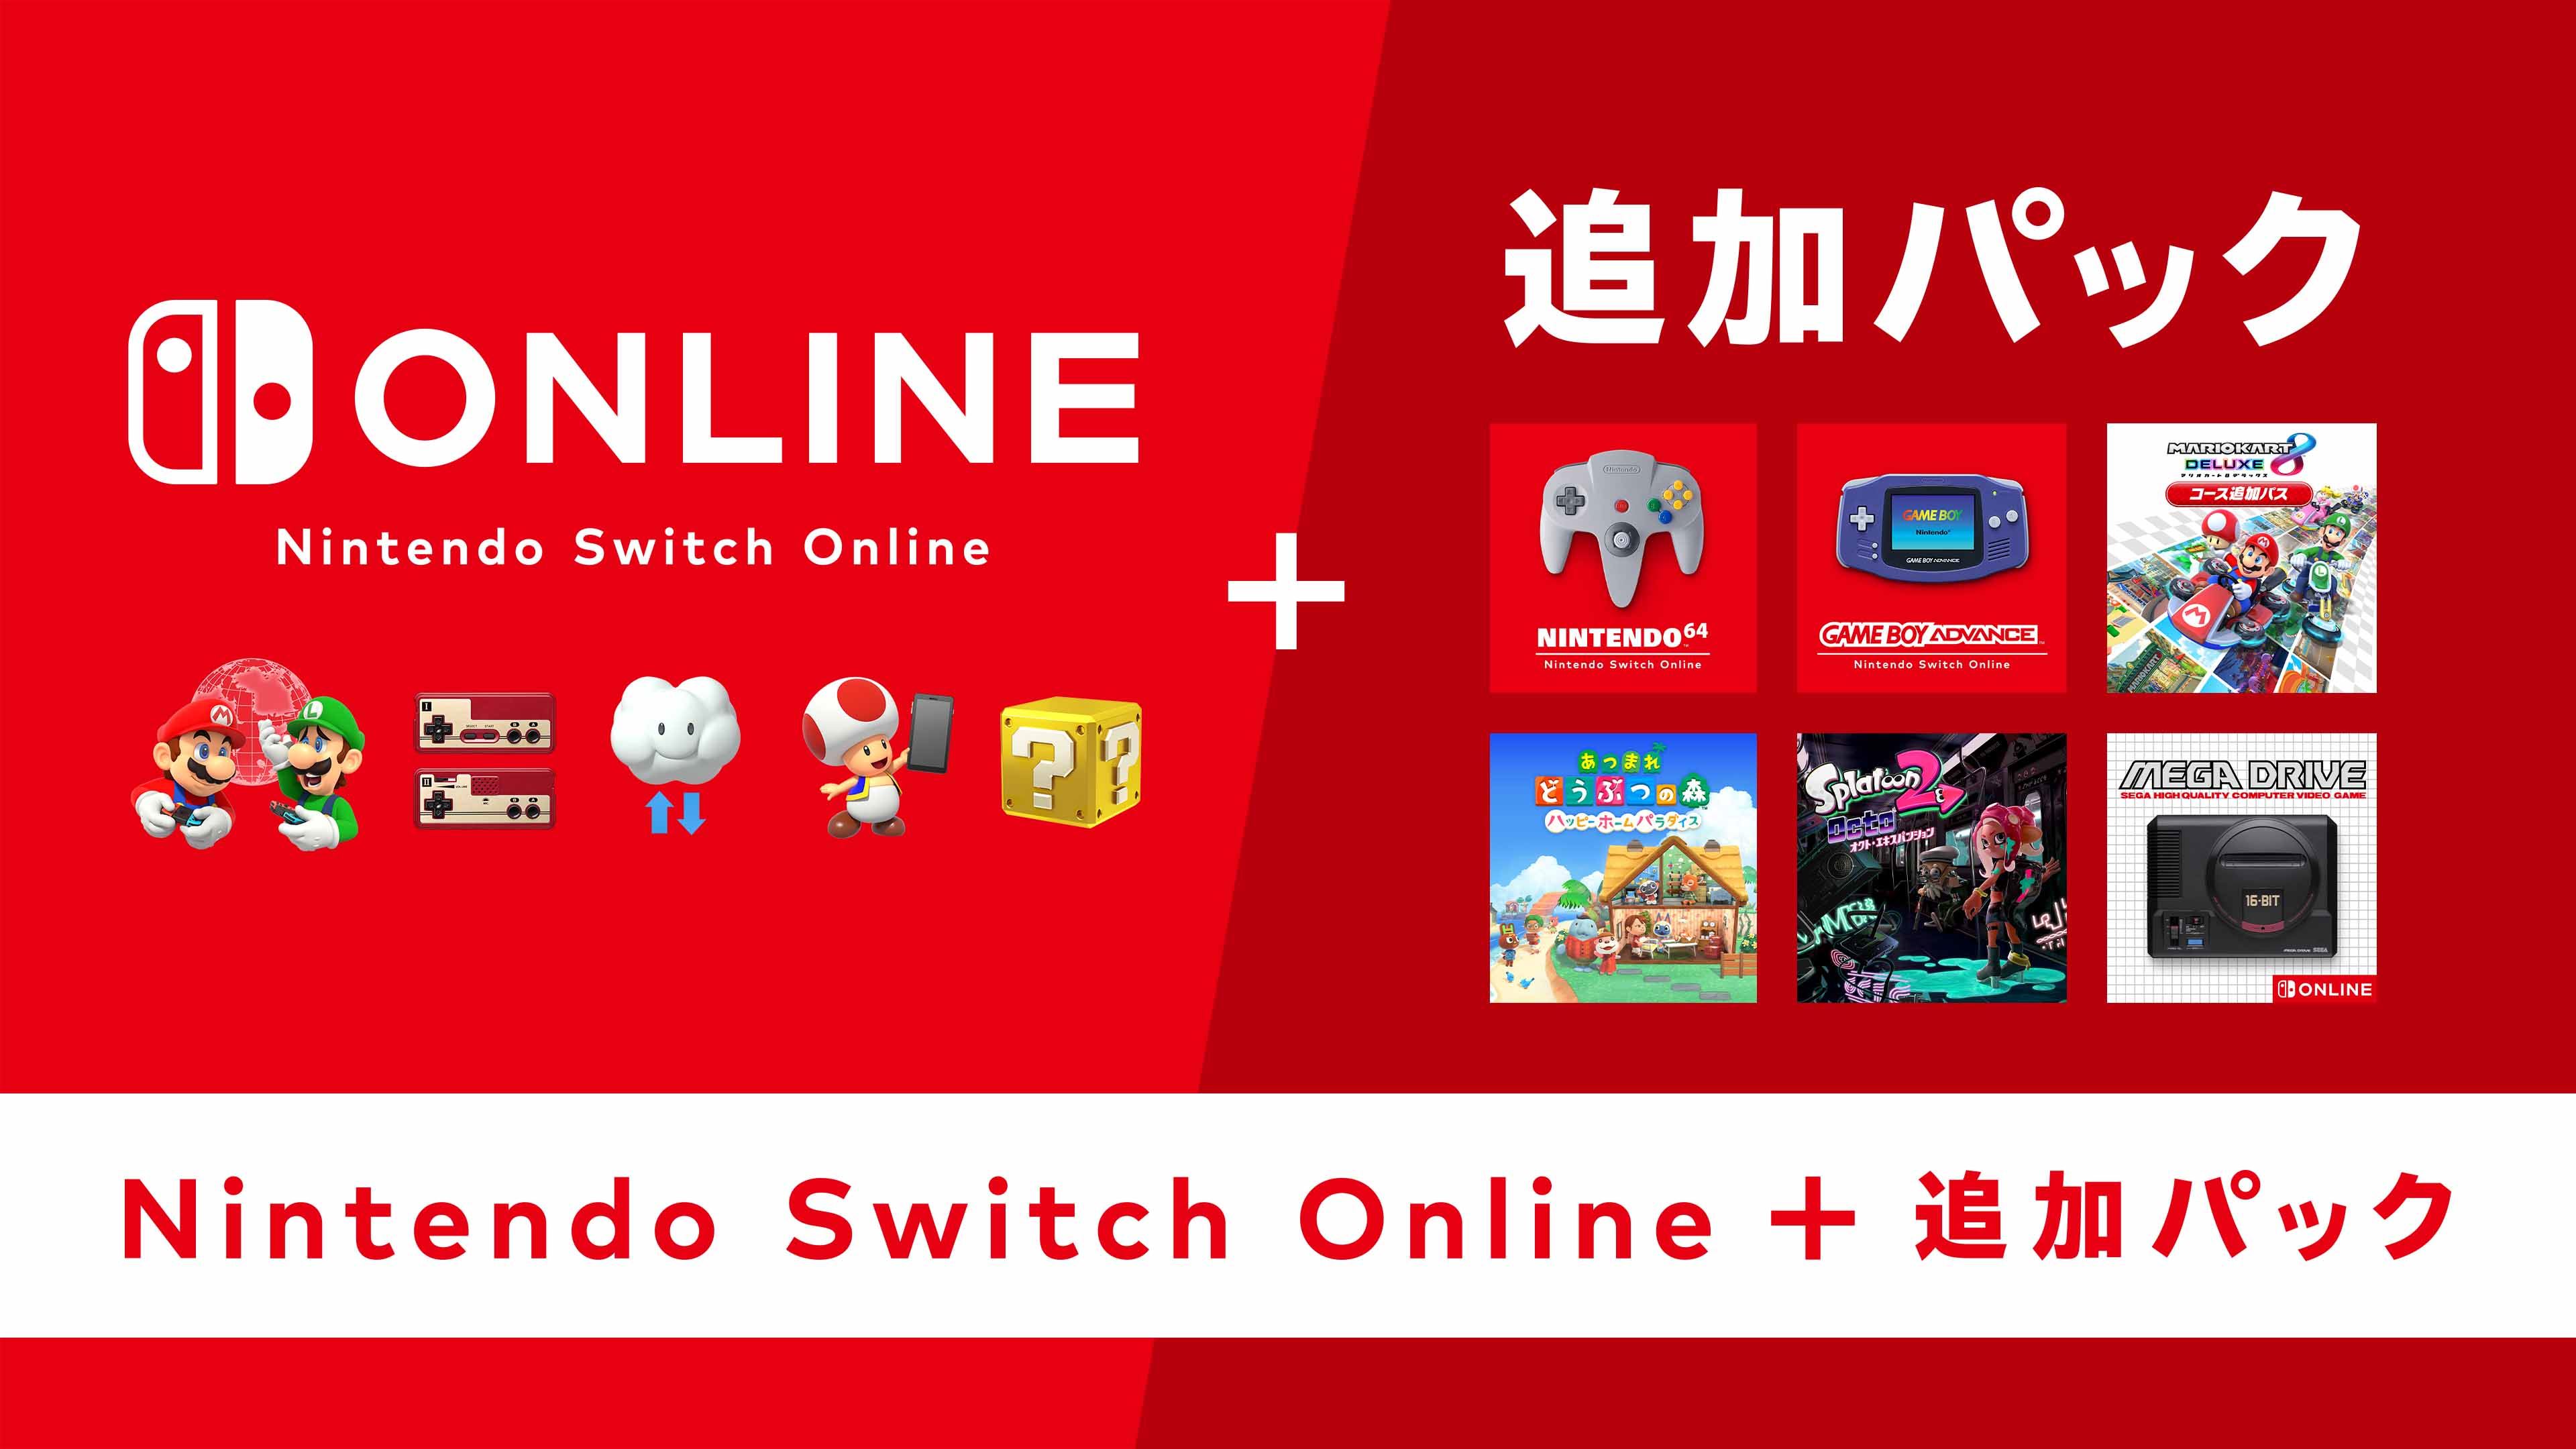 「Nintendo Switch Online + 追加パック」特集